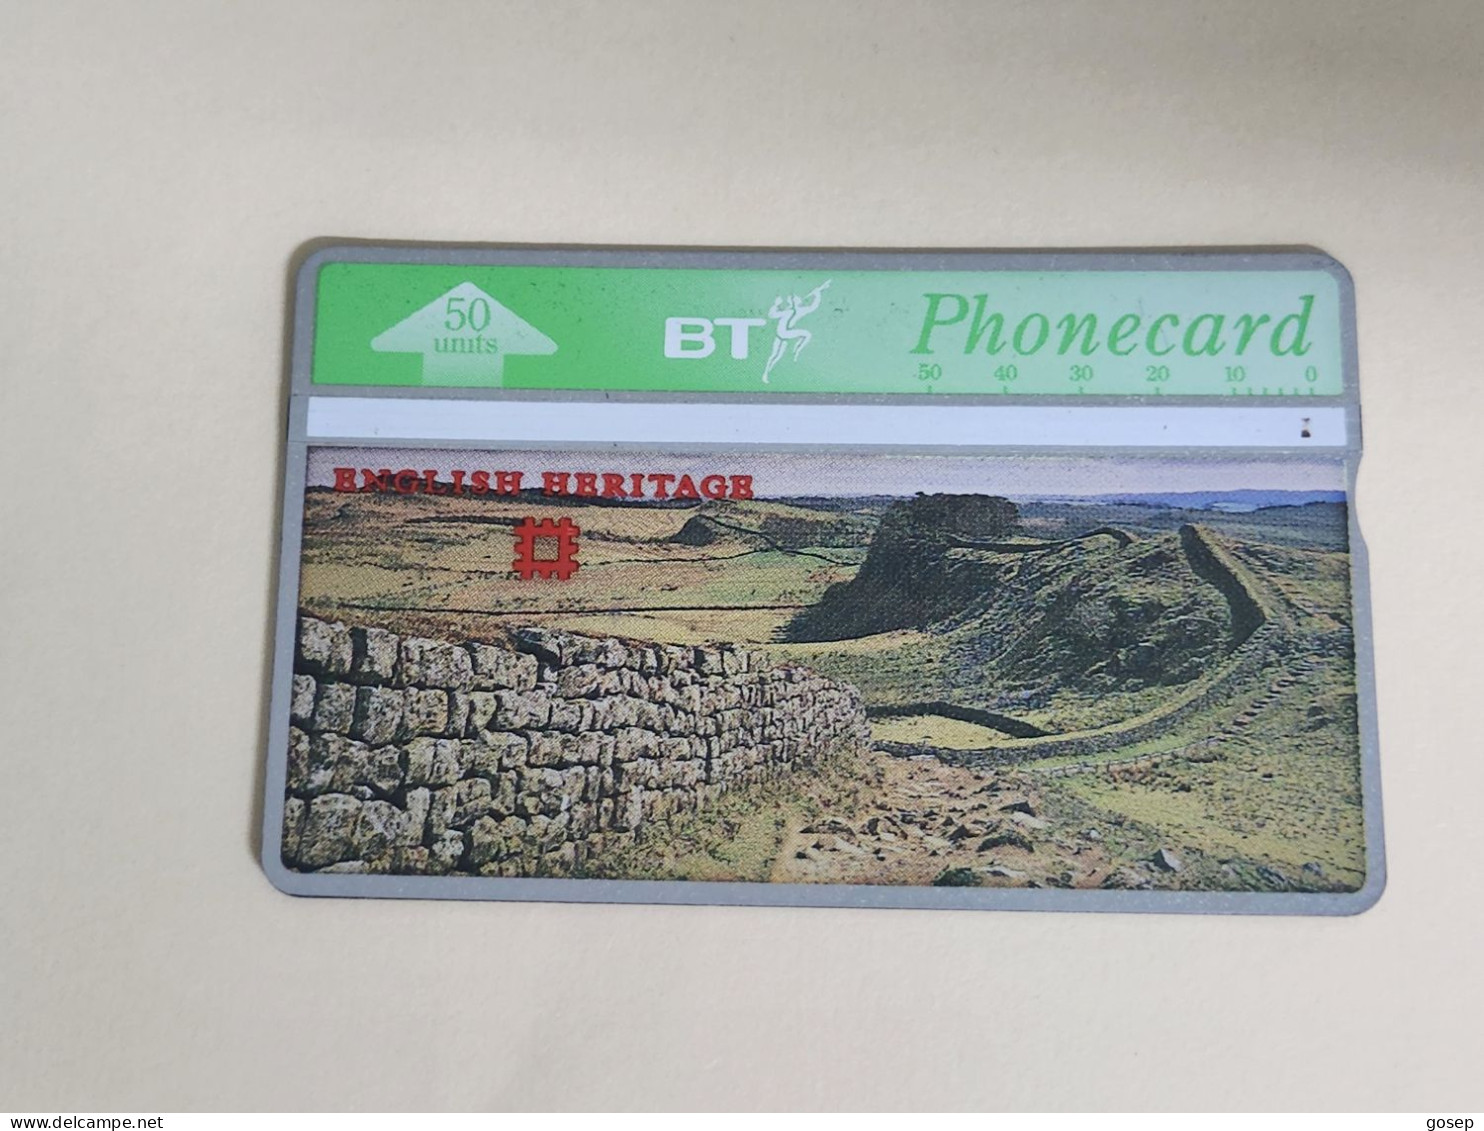 United Kingdom-(BTA107)-HERITAGE-Hadrian's Wall-(181)(50units)(528E62834)price Cataloge3.00£-used+1card Prepiad Free - BT Advertising Issues